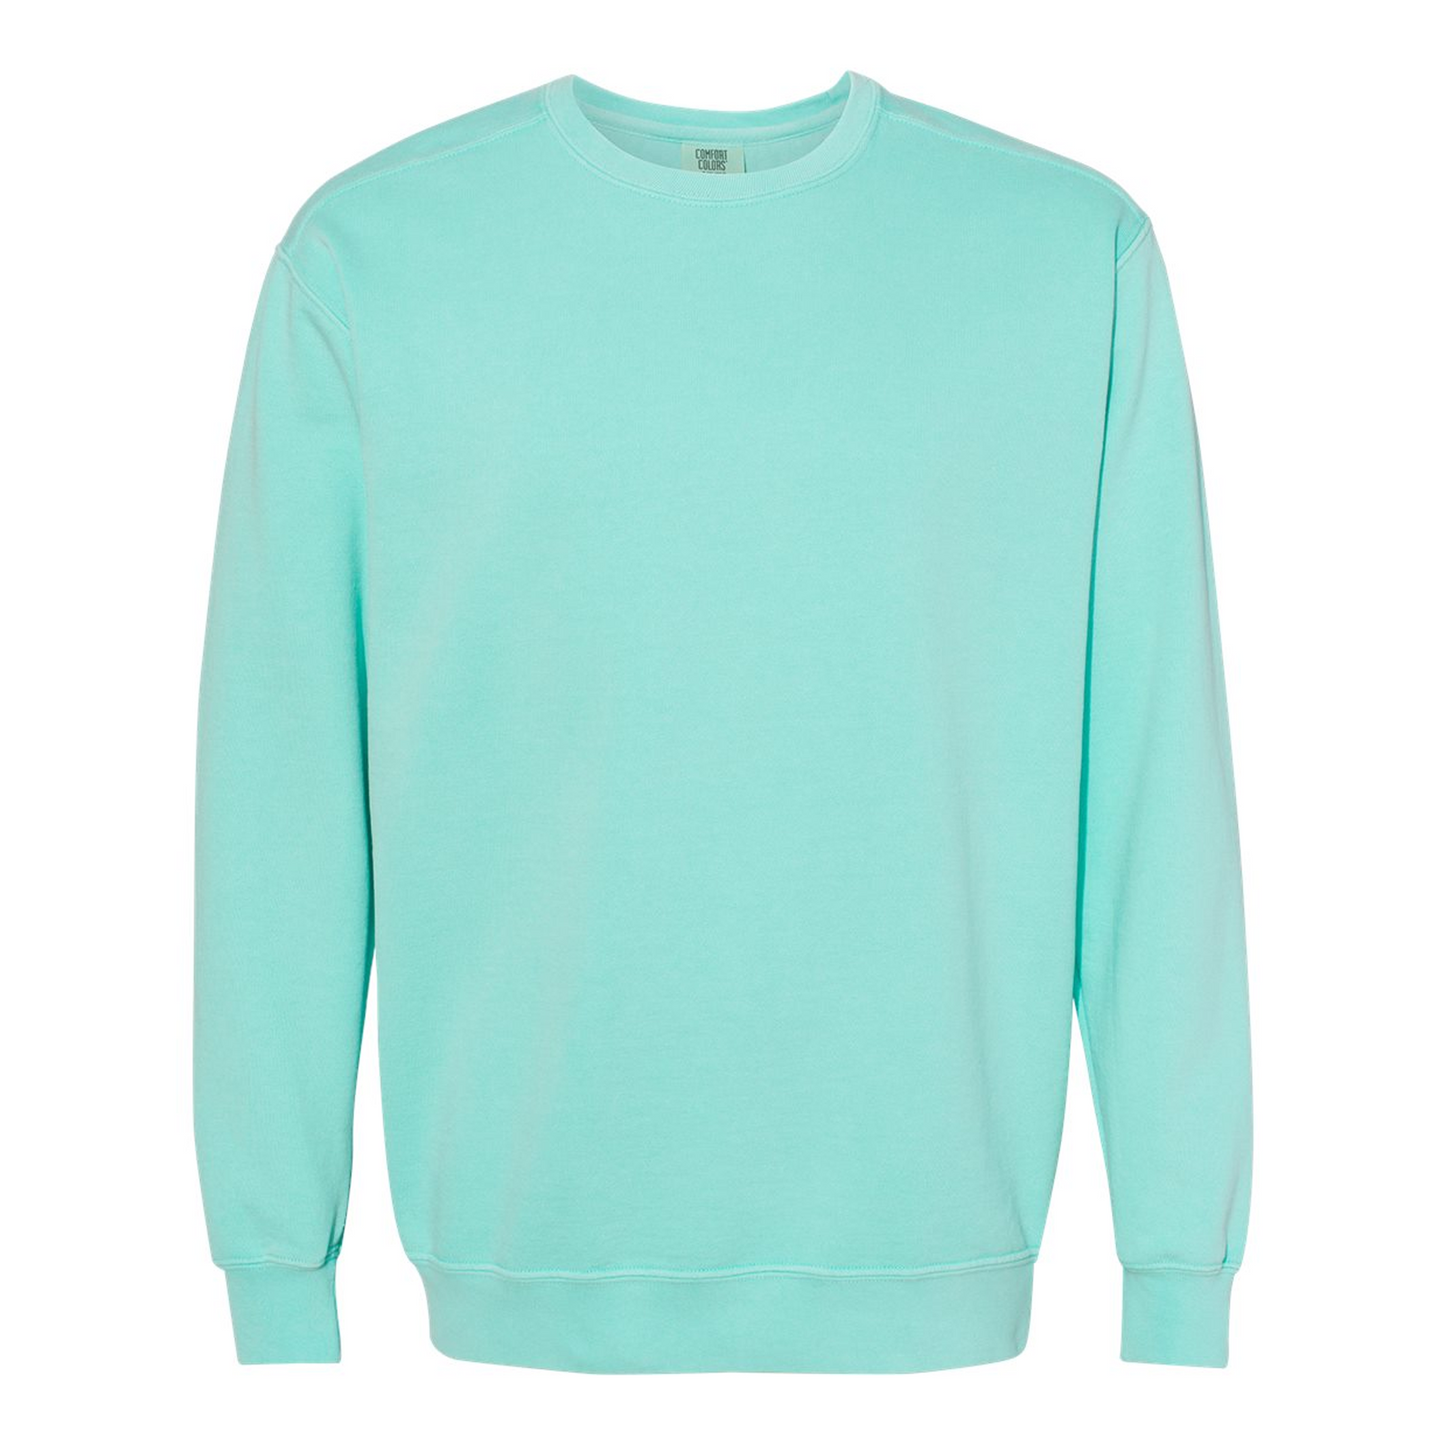 Comfort Colors - Garment-Dyed Sweatshirt - 1566